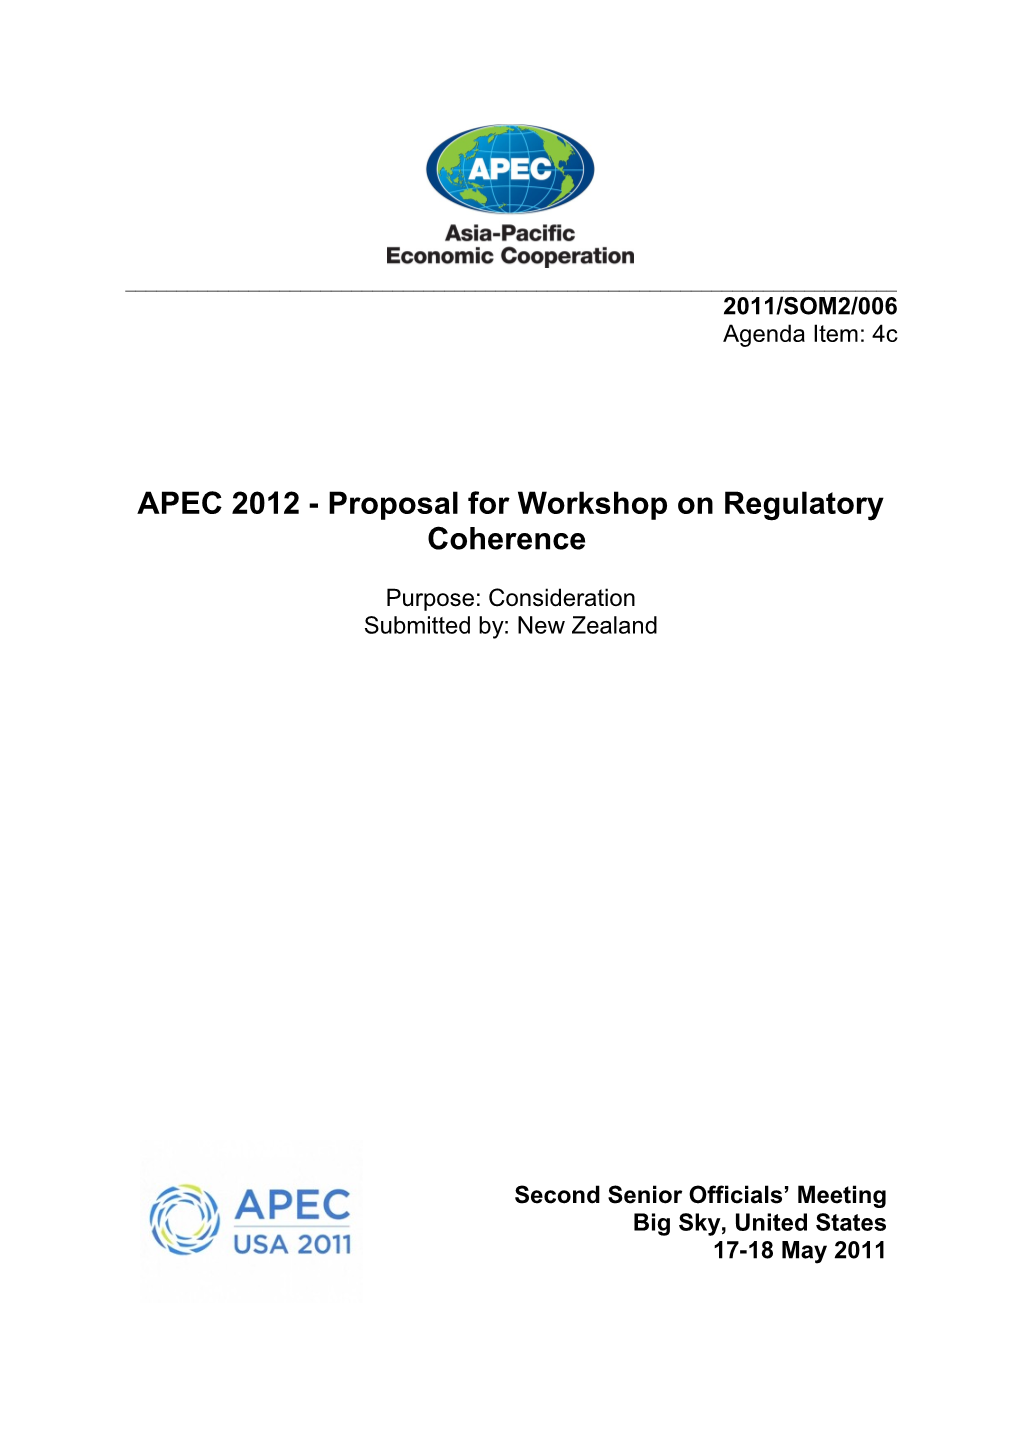 APEC 2012 - Proposal for Workshop on Regulatory Coherence